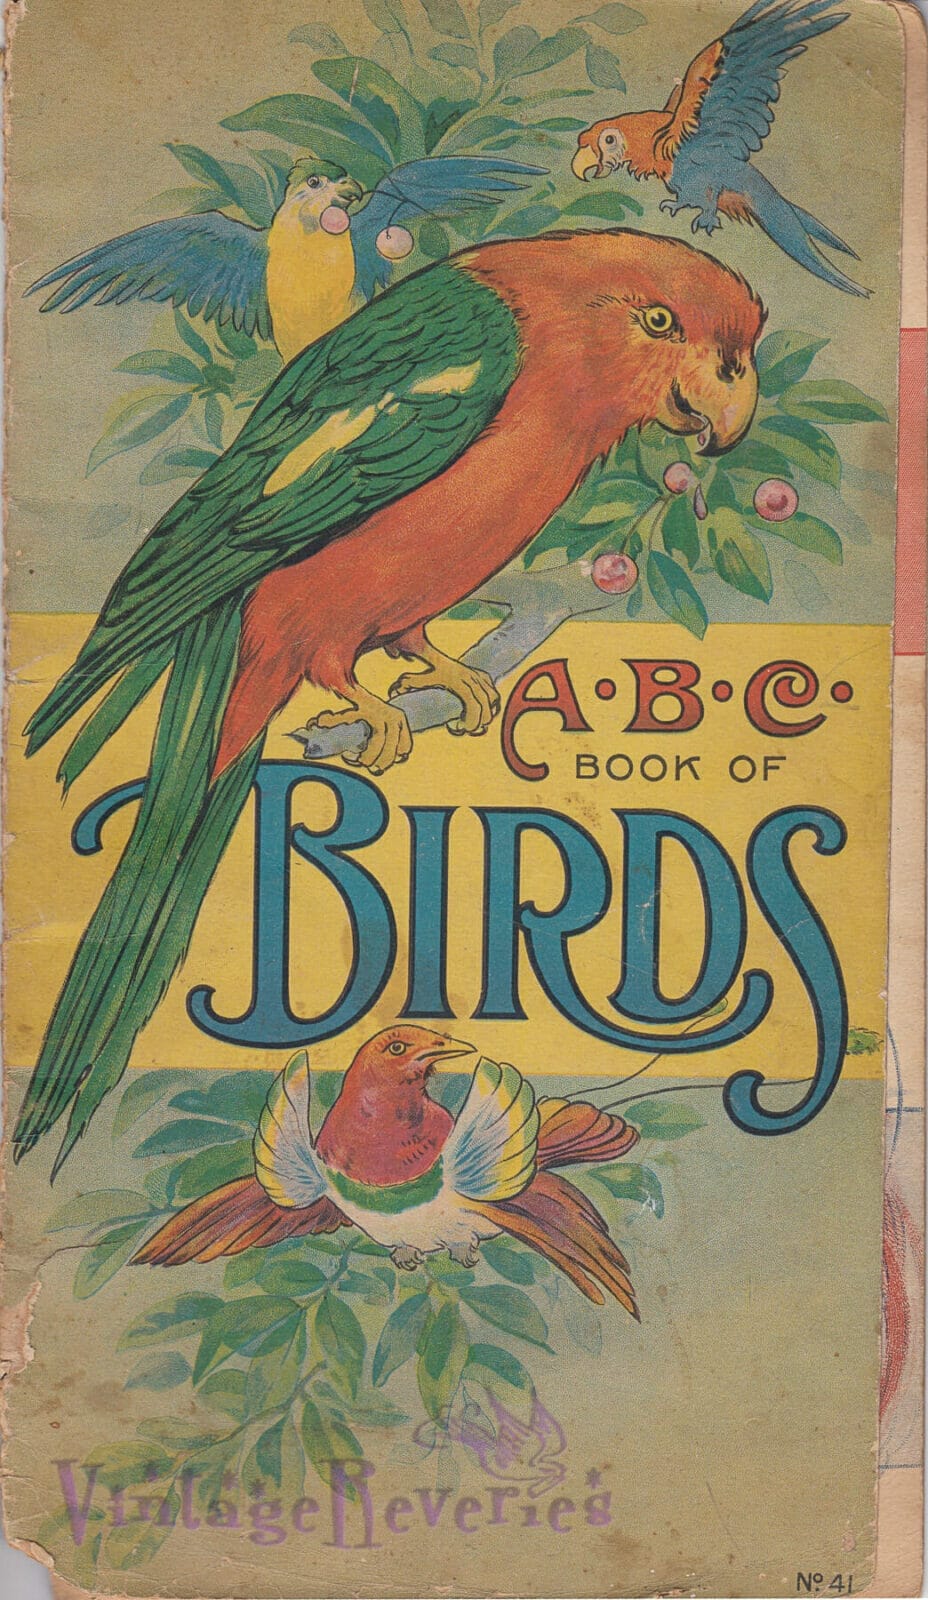 Illustrated childrens ABC bird book